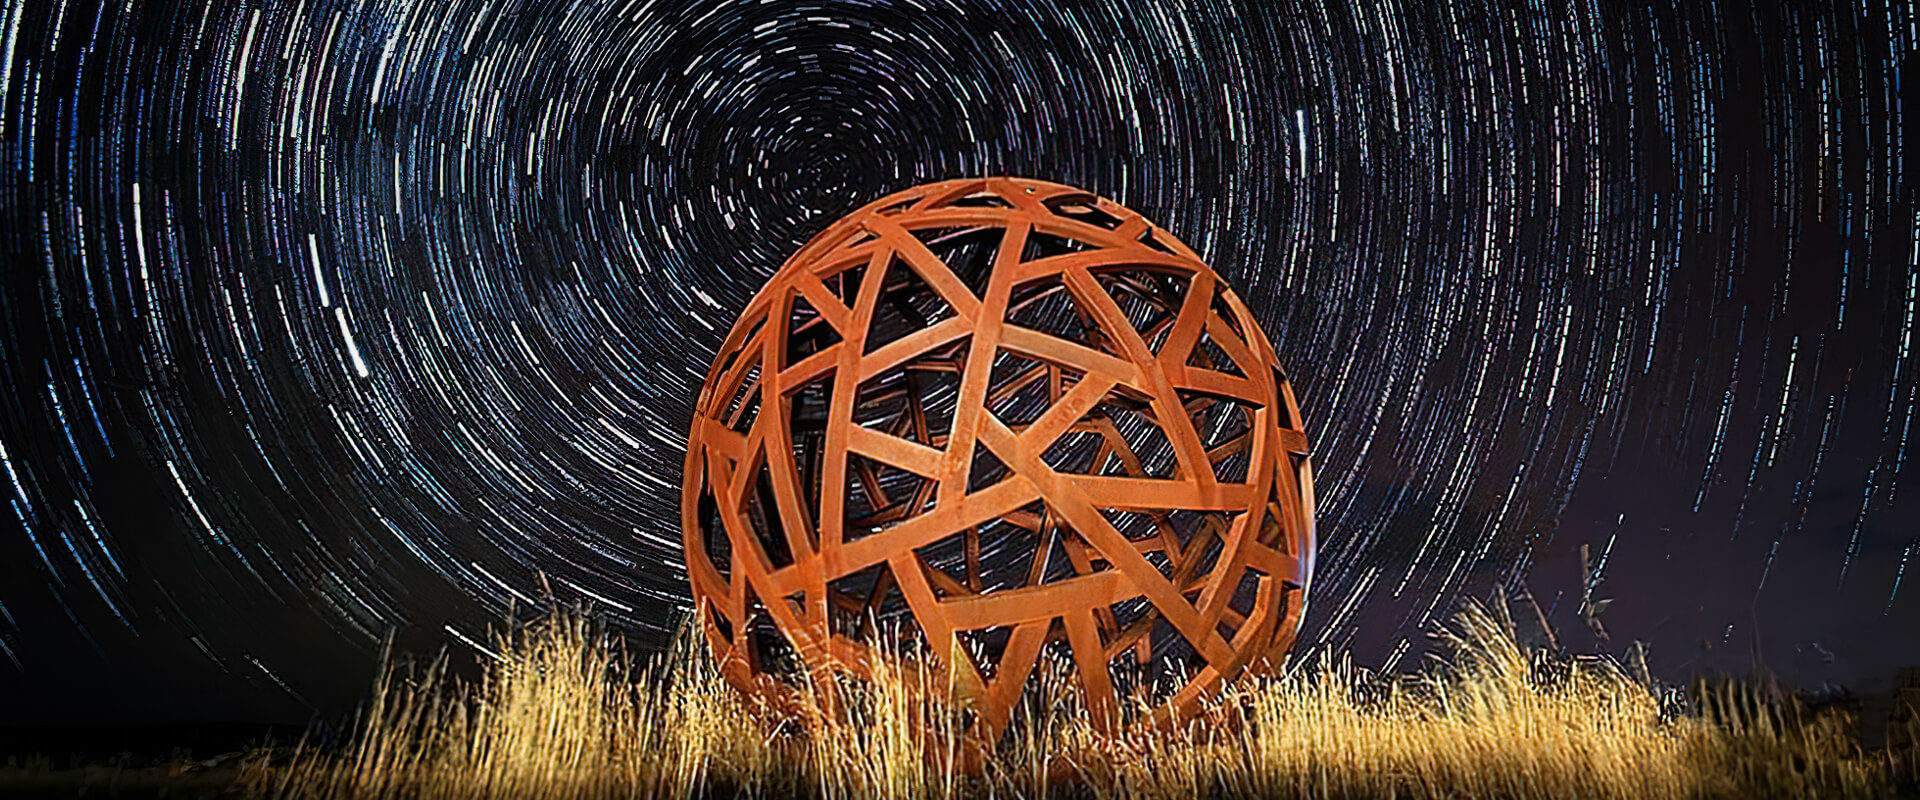 Snowy Sphere sculpture